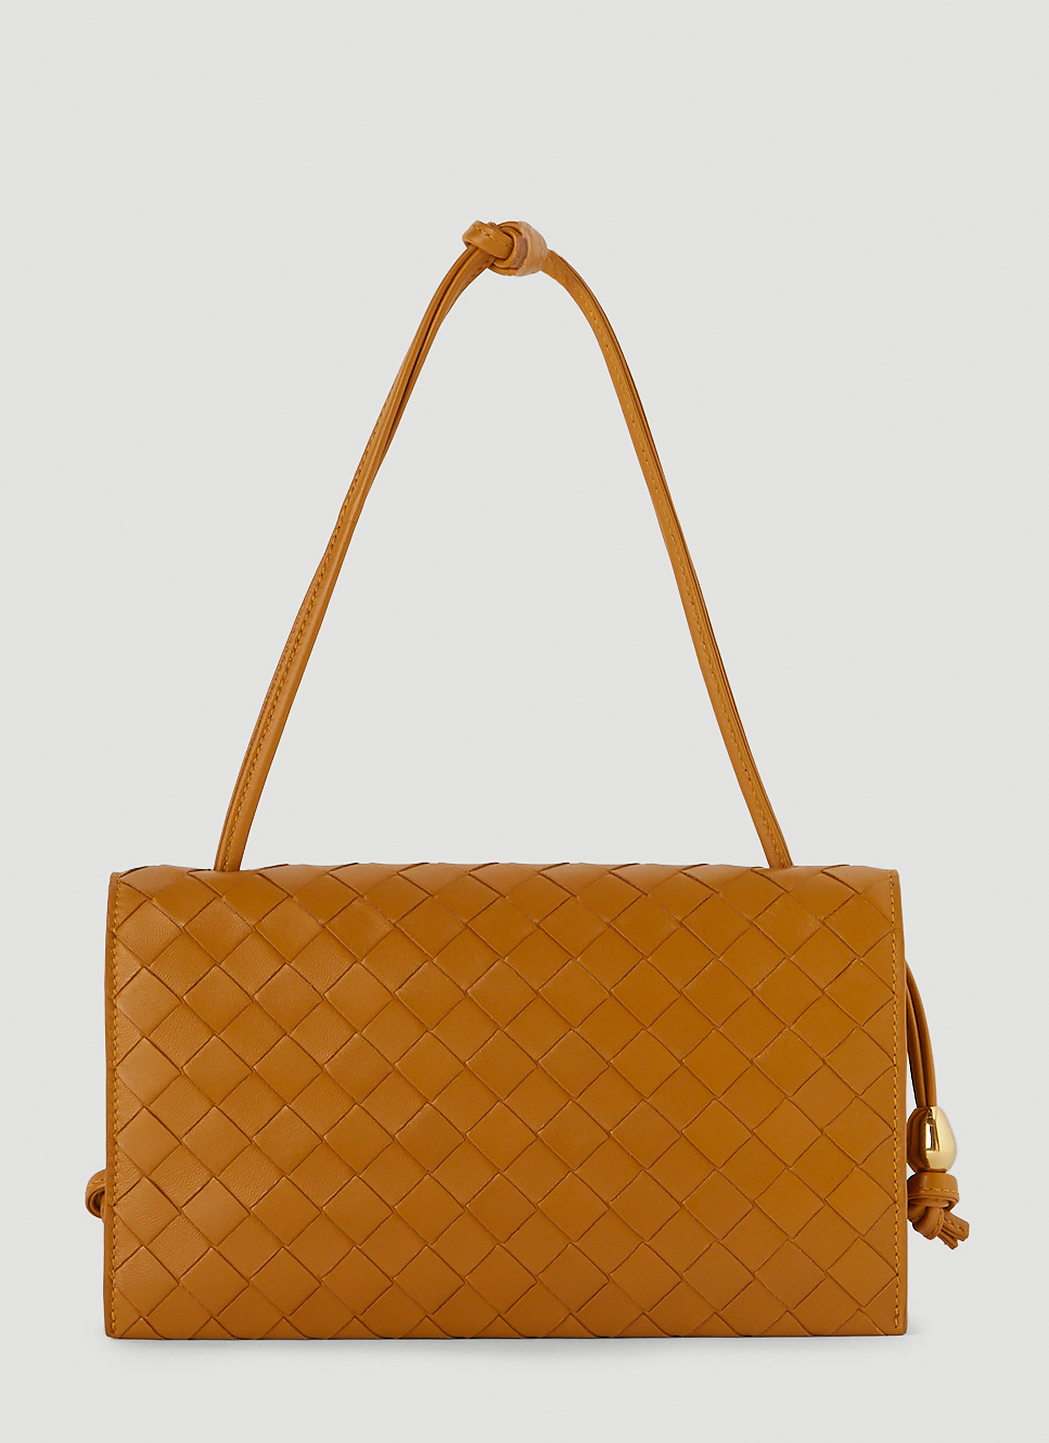 Bottega Veneta Intrecciato bag Hand bag sholder bag orange brown Leather  beauty